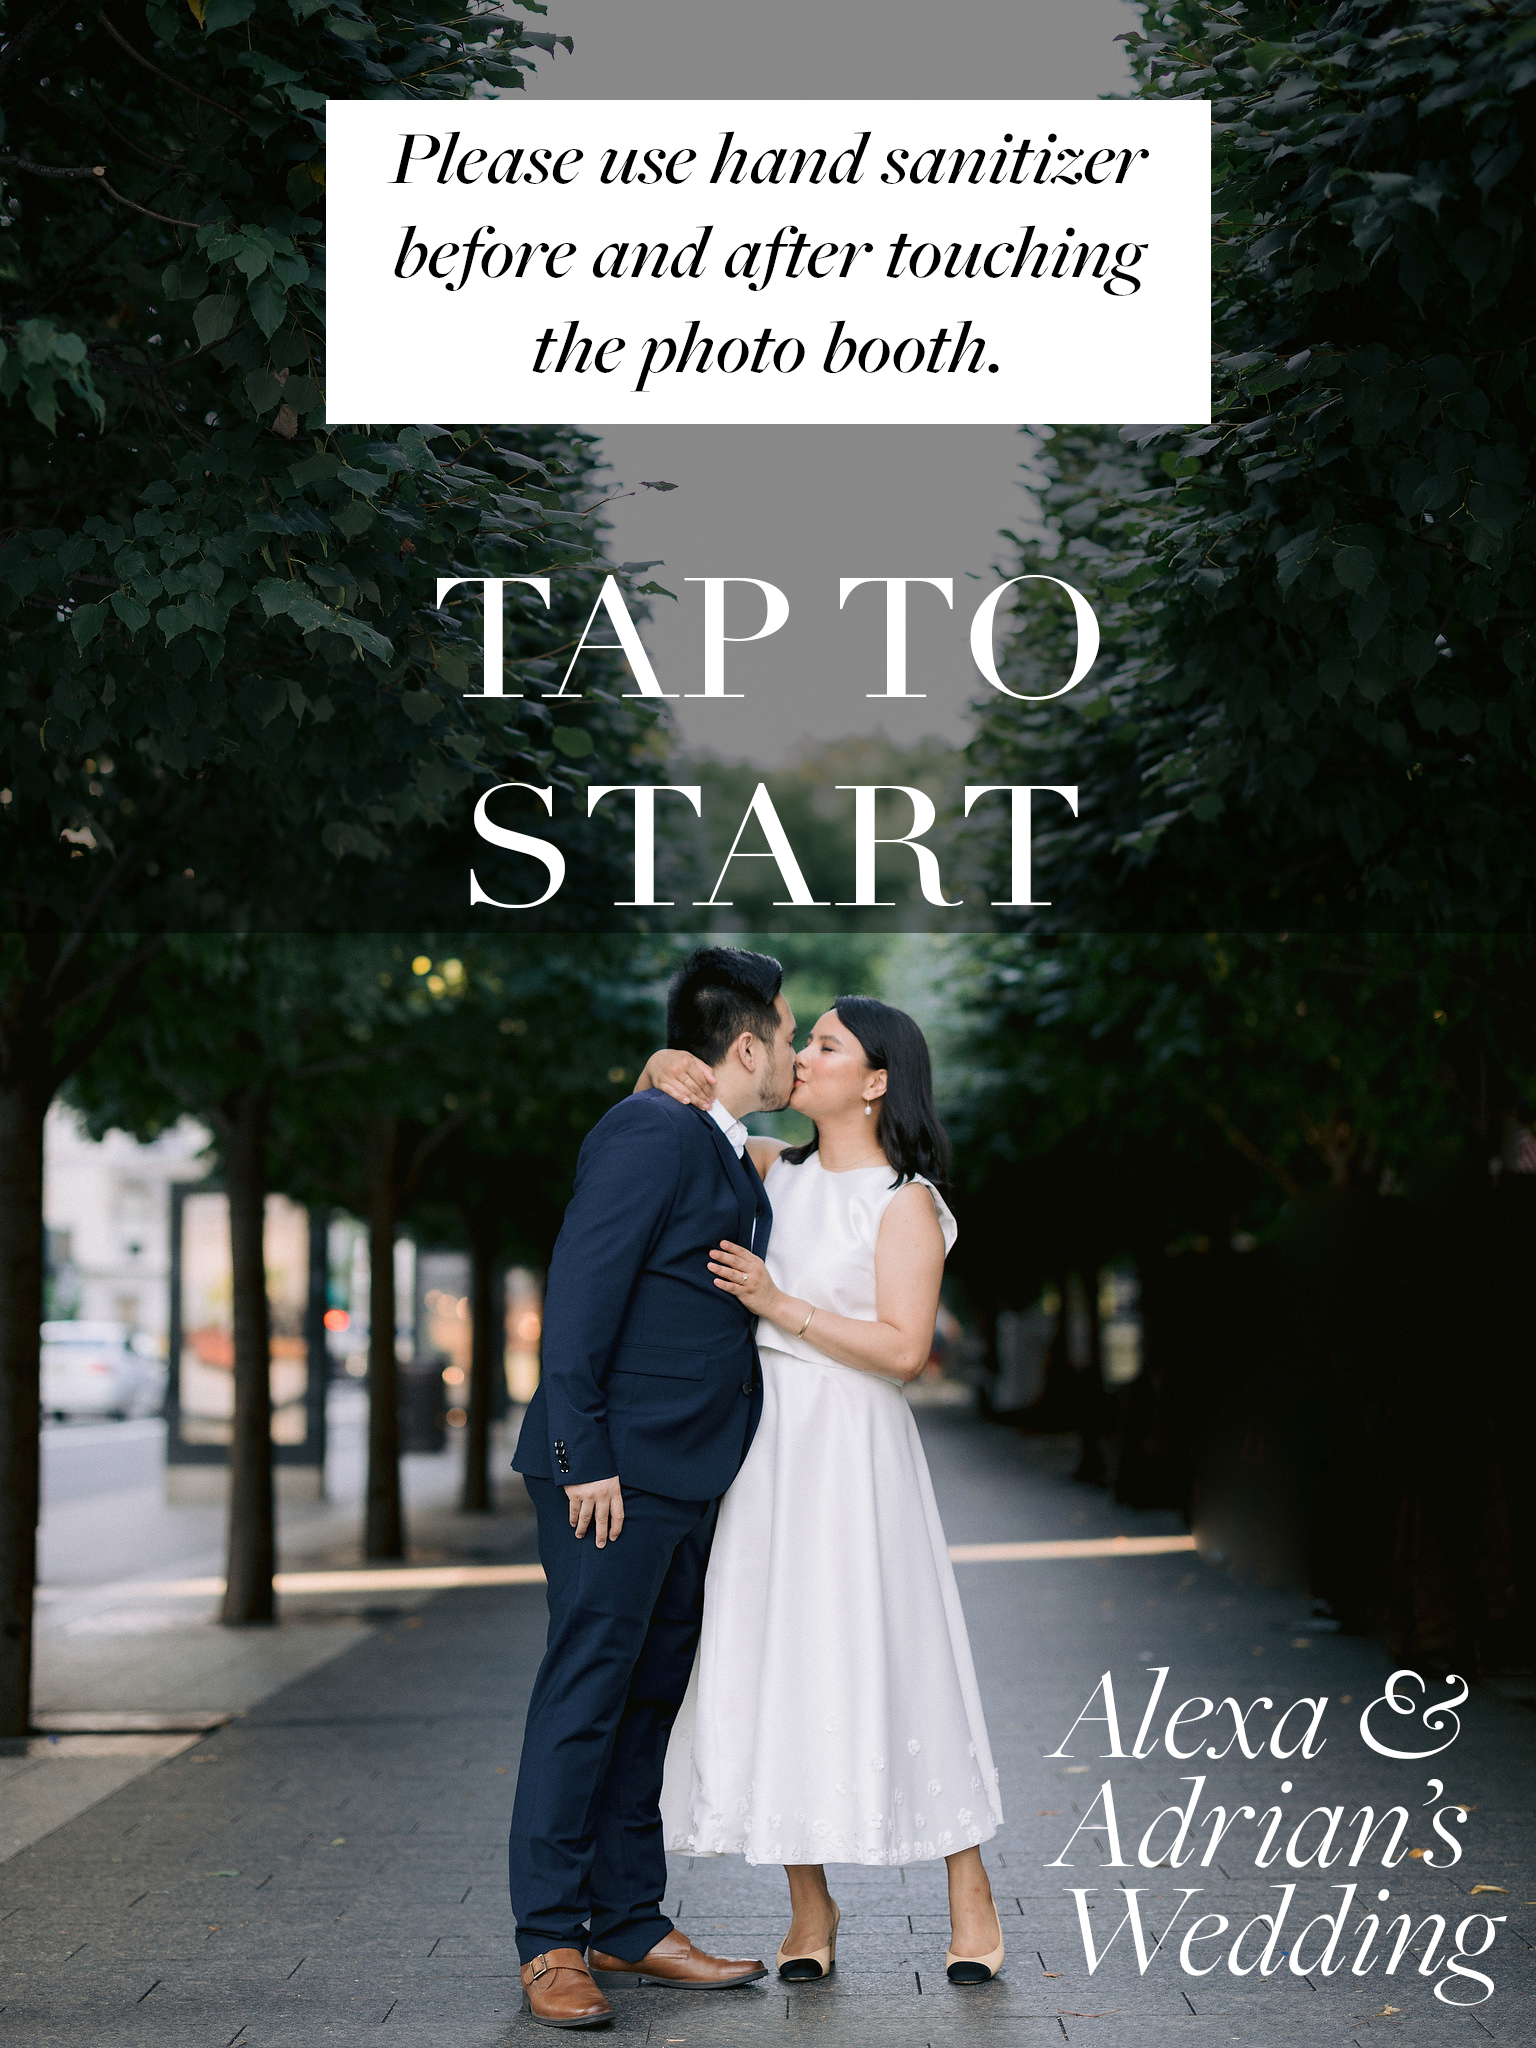 A digital wedding photo booth screensaver promoting sanitizing hands.